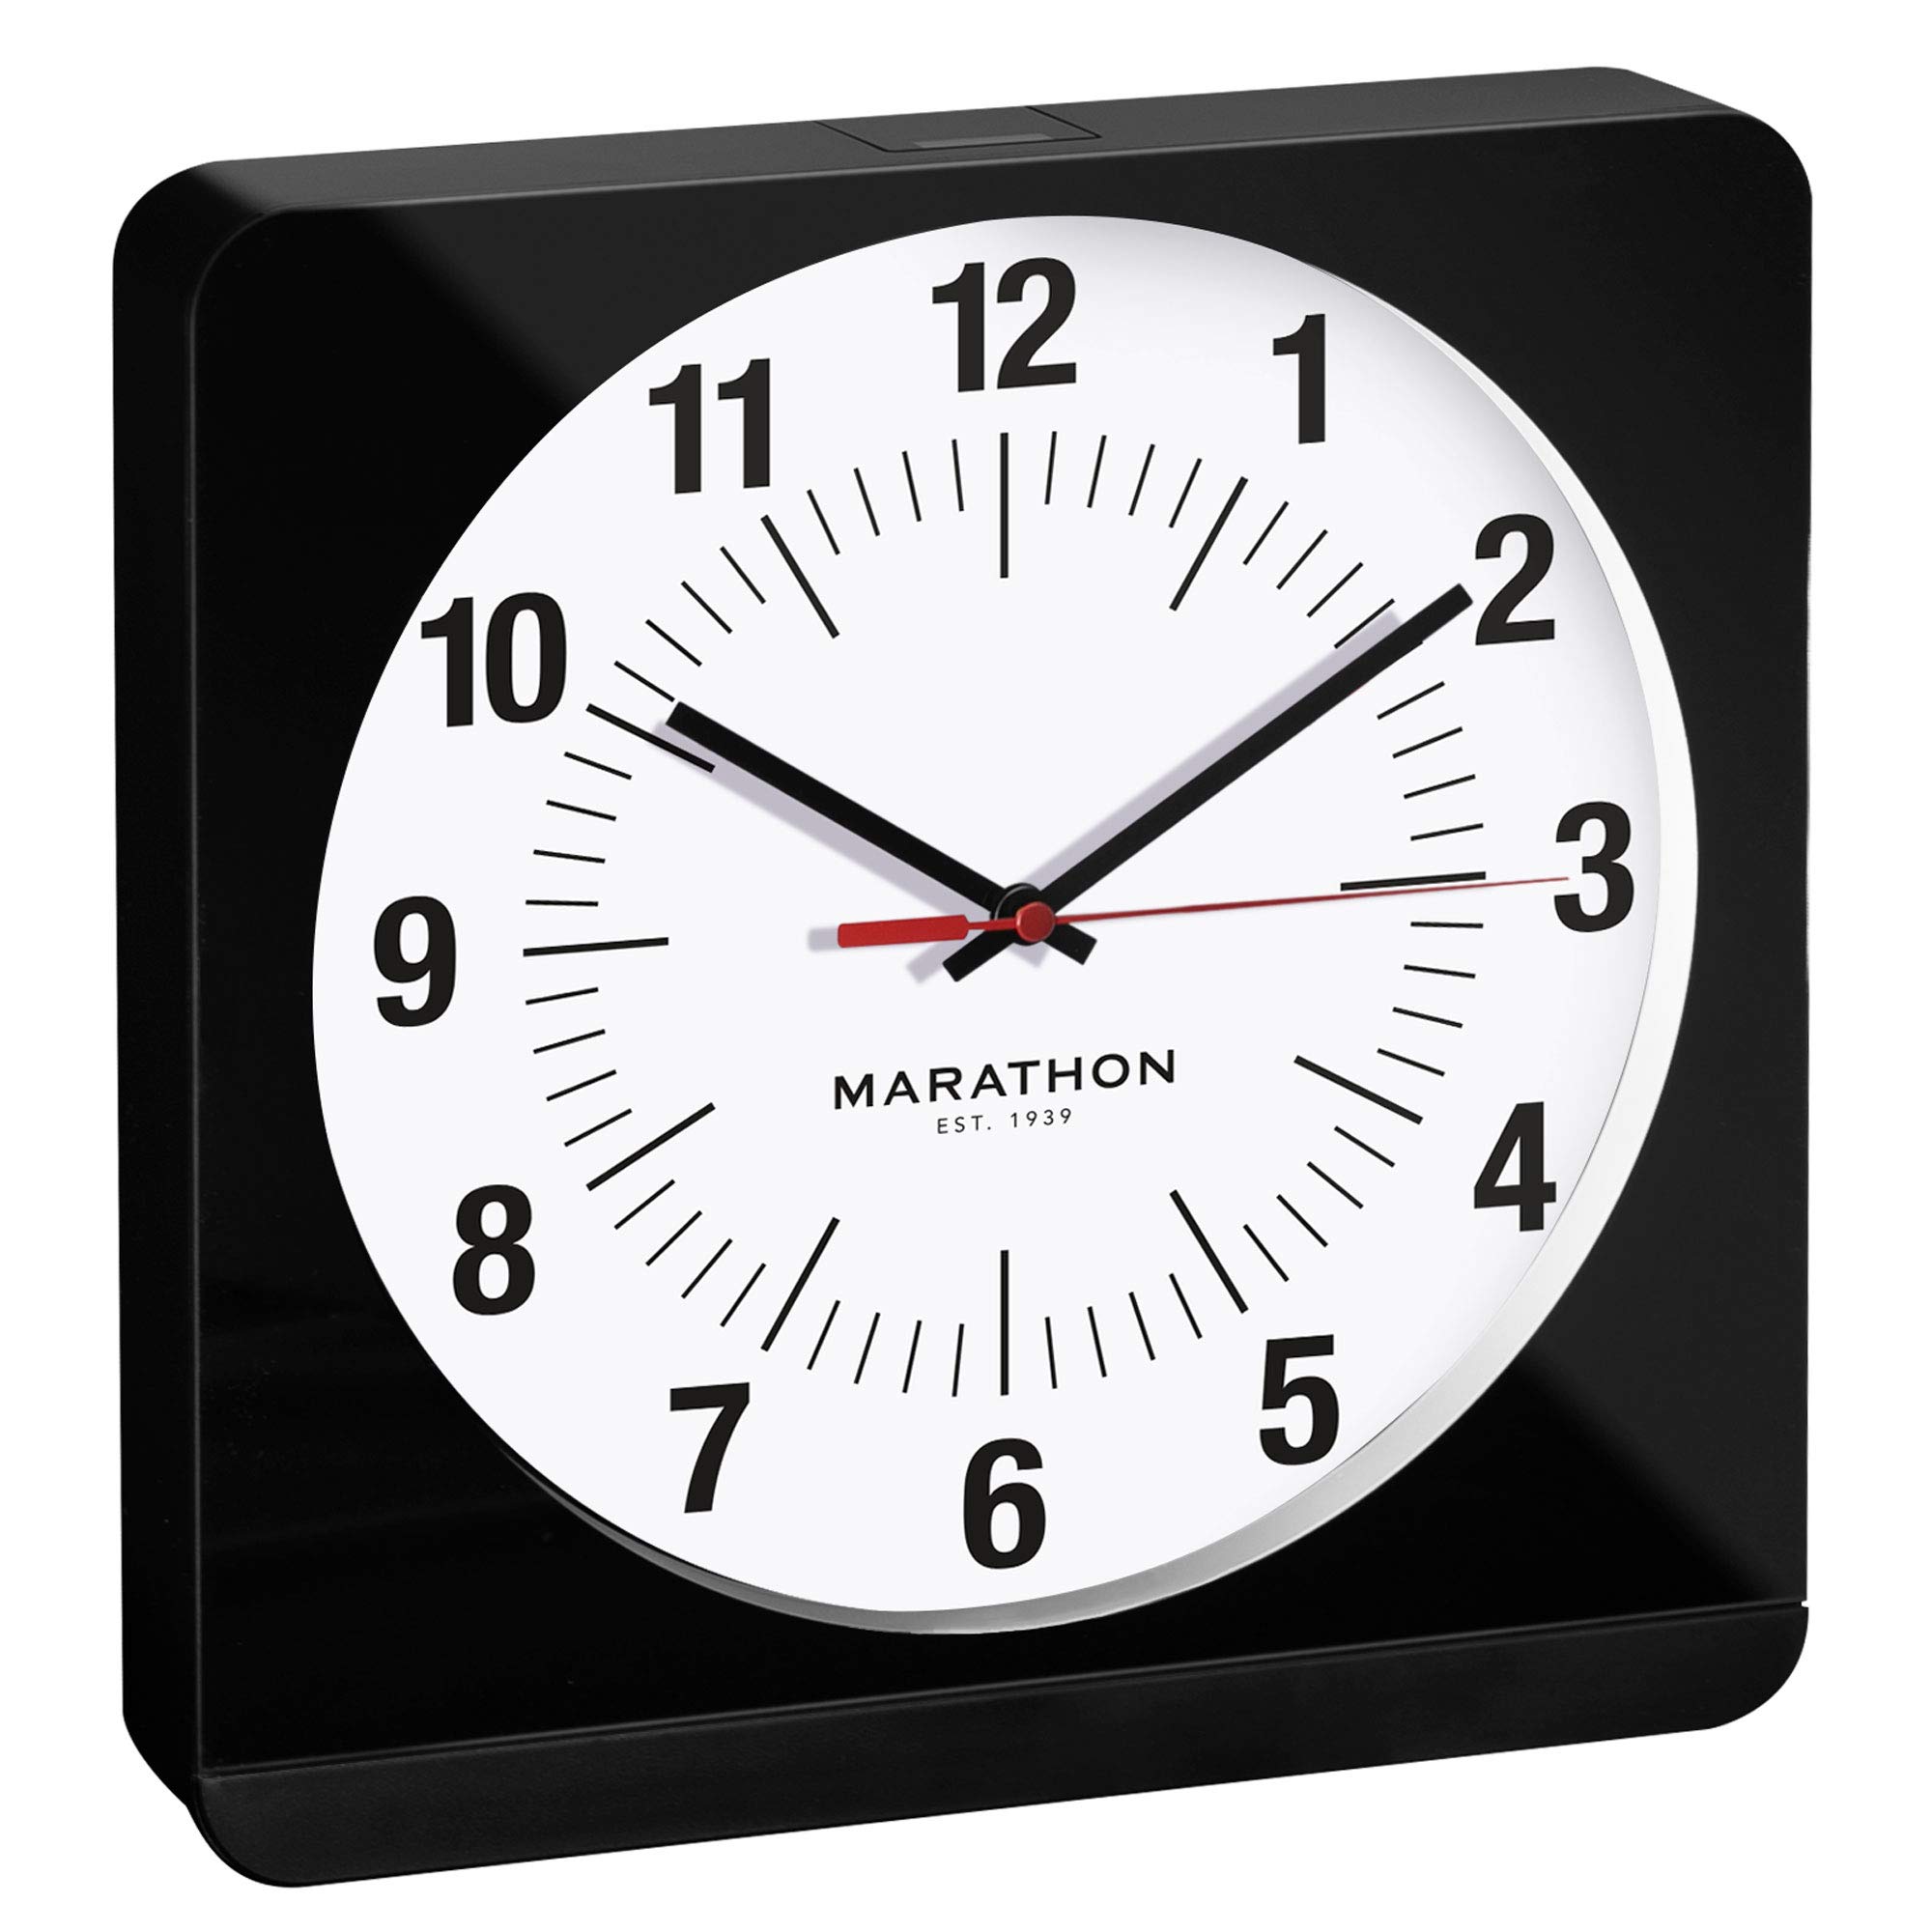 MARATHON Studio Edition Jumbo 12 Inch Analog Wall Clock with Auto Night-Light